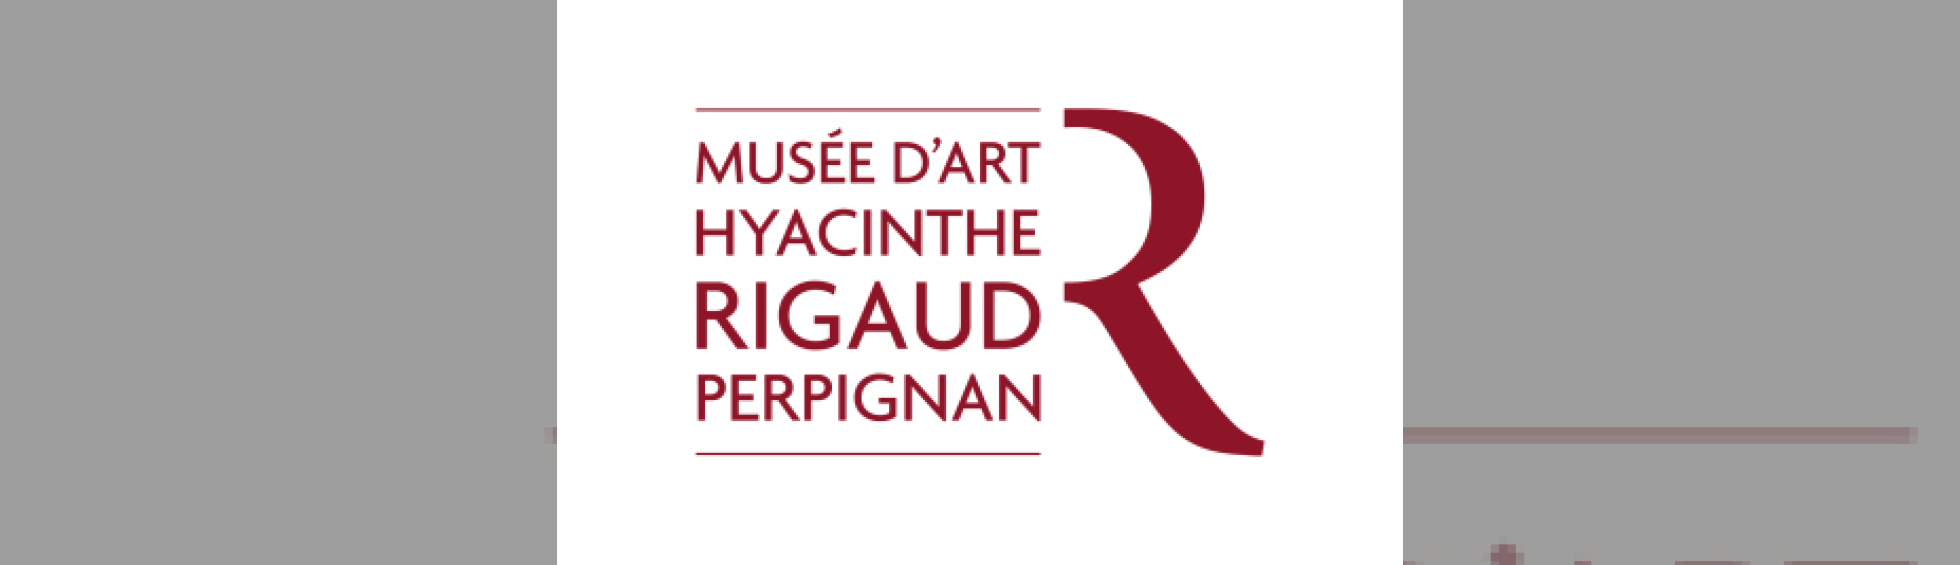 Logo Musée Rigaud